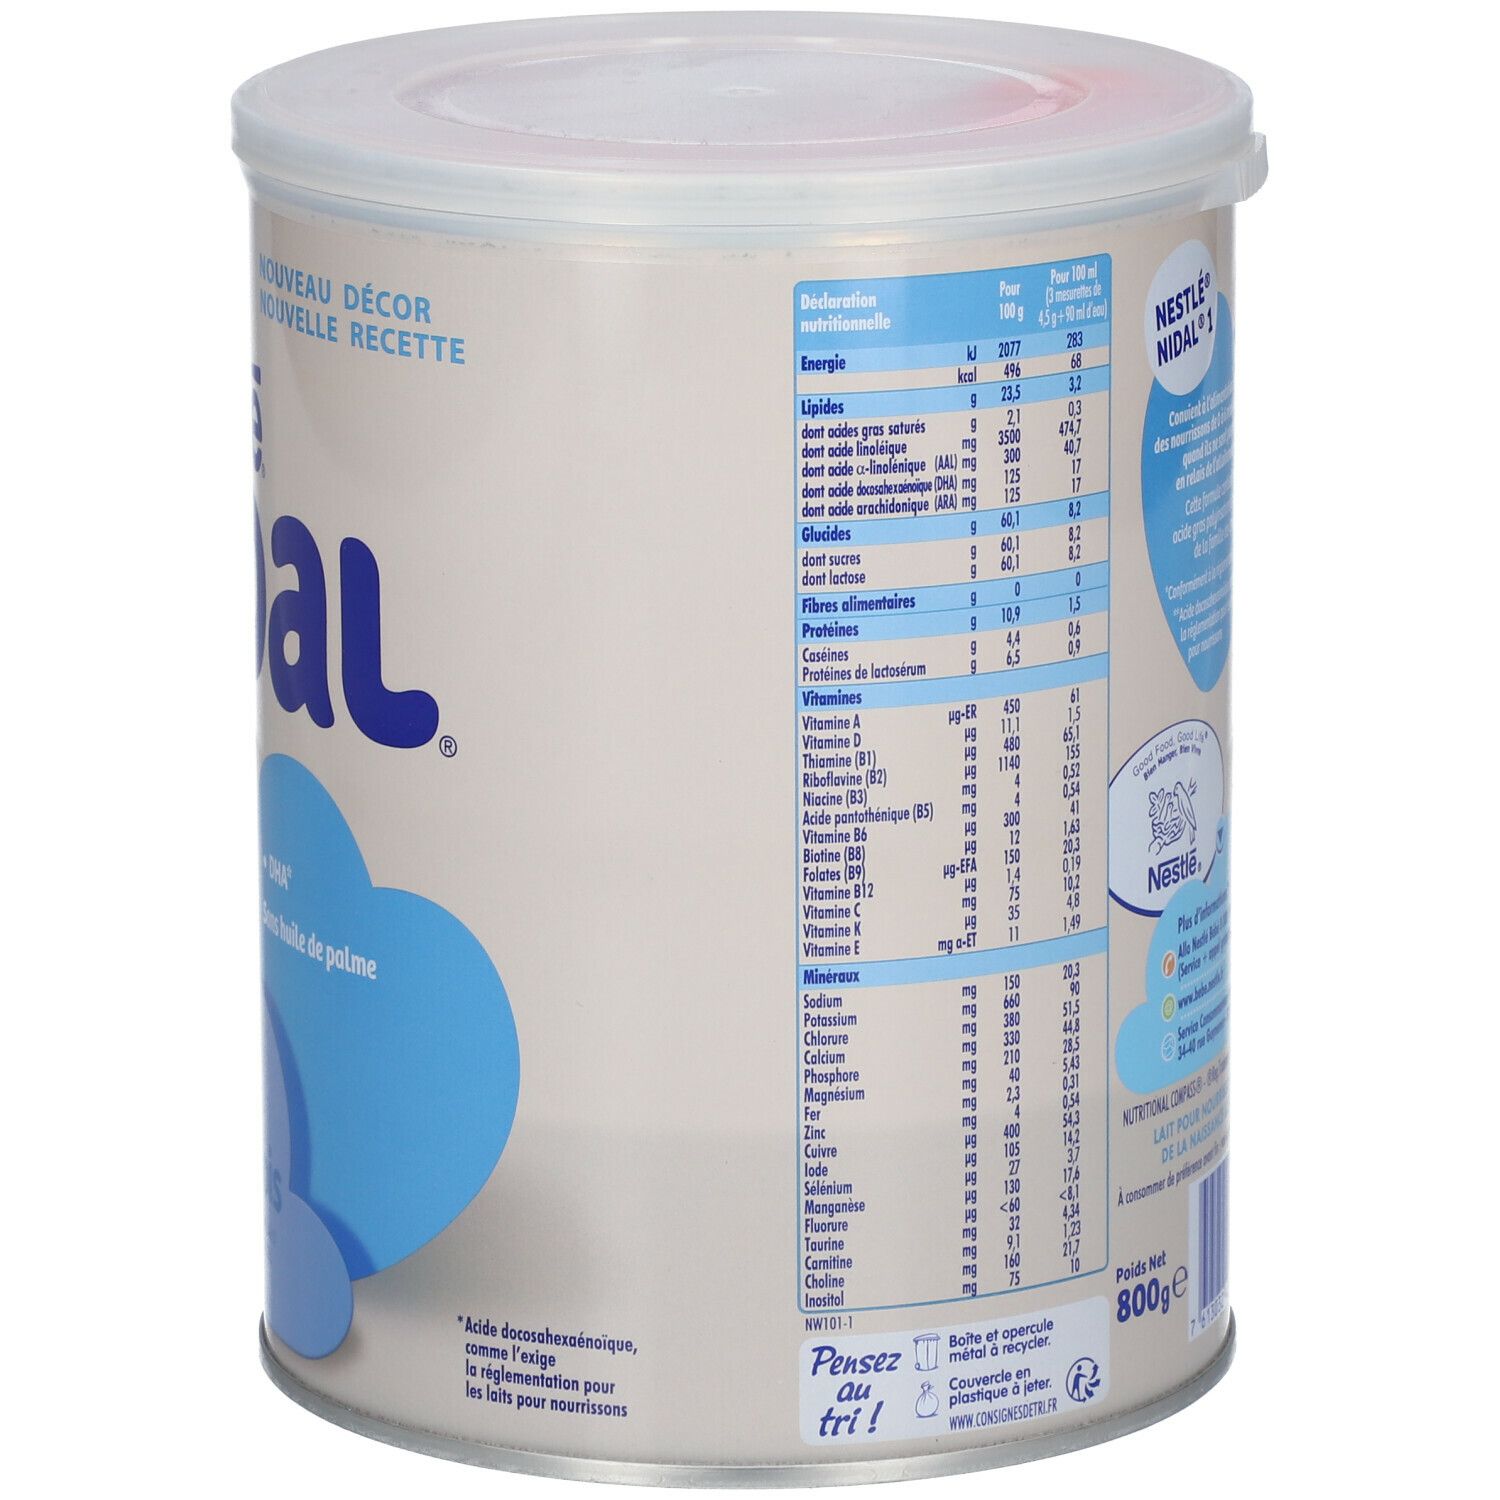 Nestlé® Nidal® 1 800 g - Redcare Pharmacie